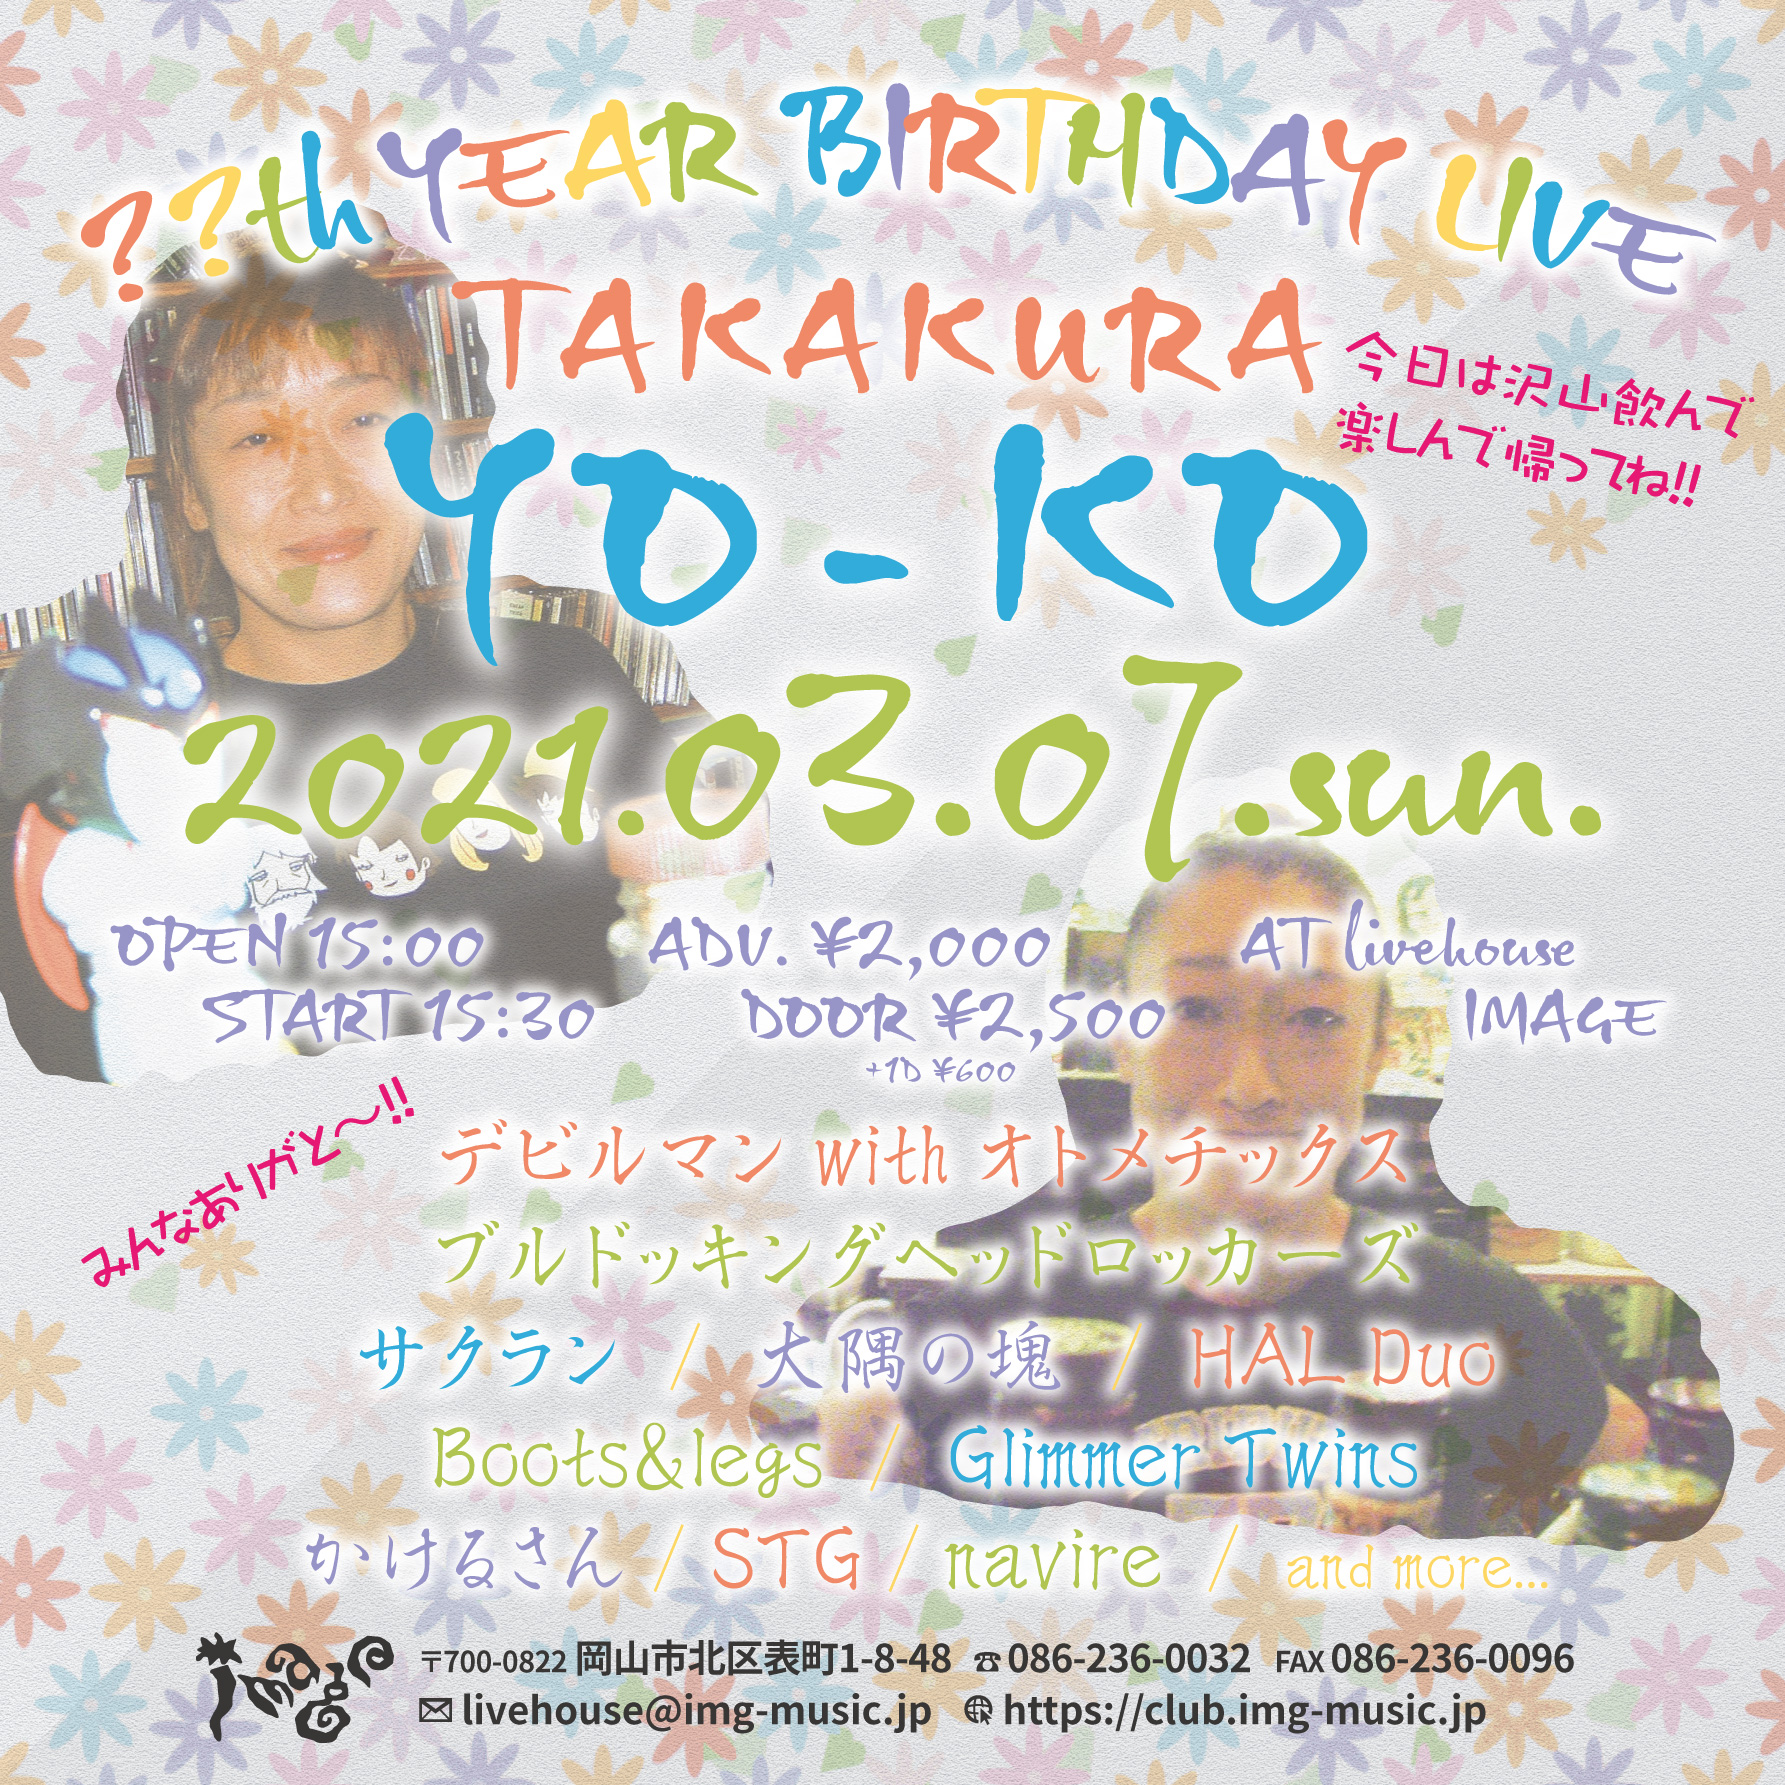 ??th YEAR Birthday LIVE “TAKAKURA YO-KO”